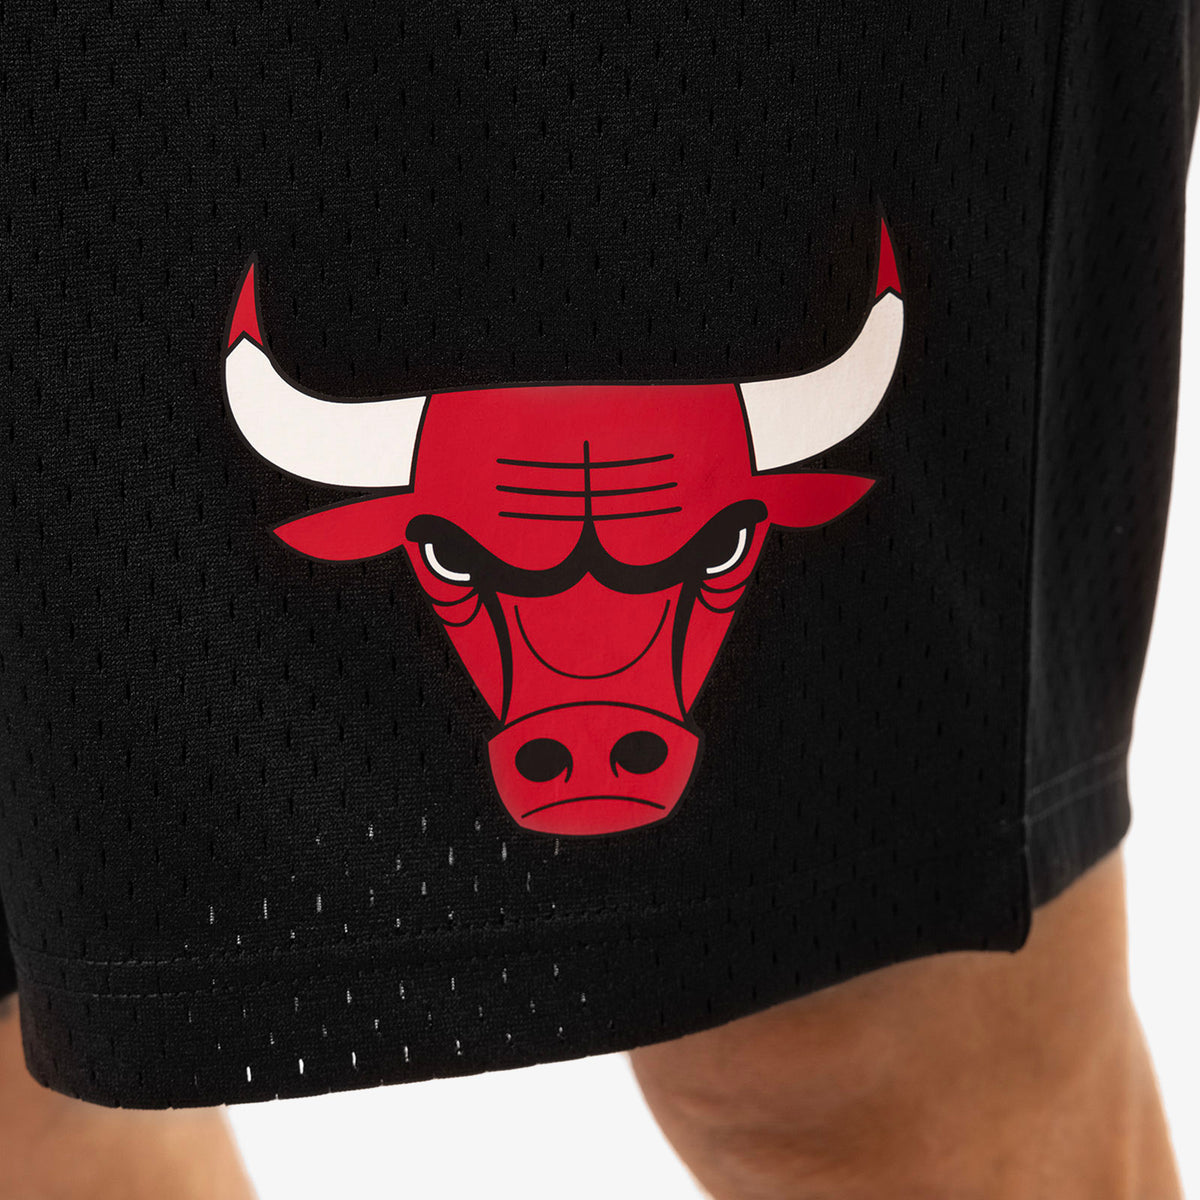 Chicago Bulls Mesh Court Shorts - Black